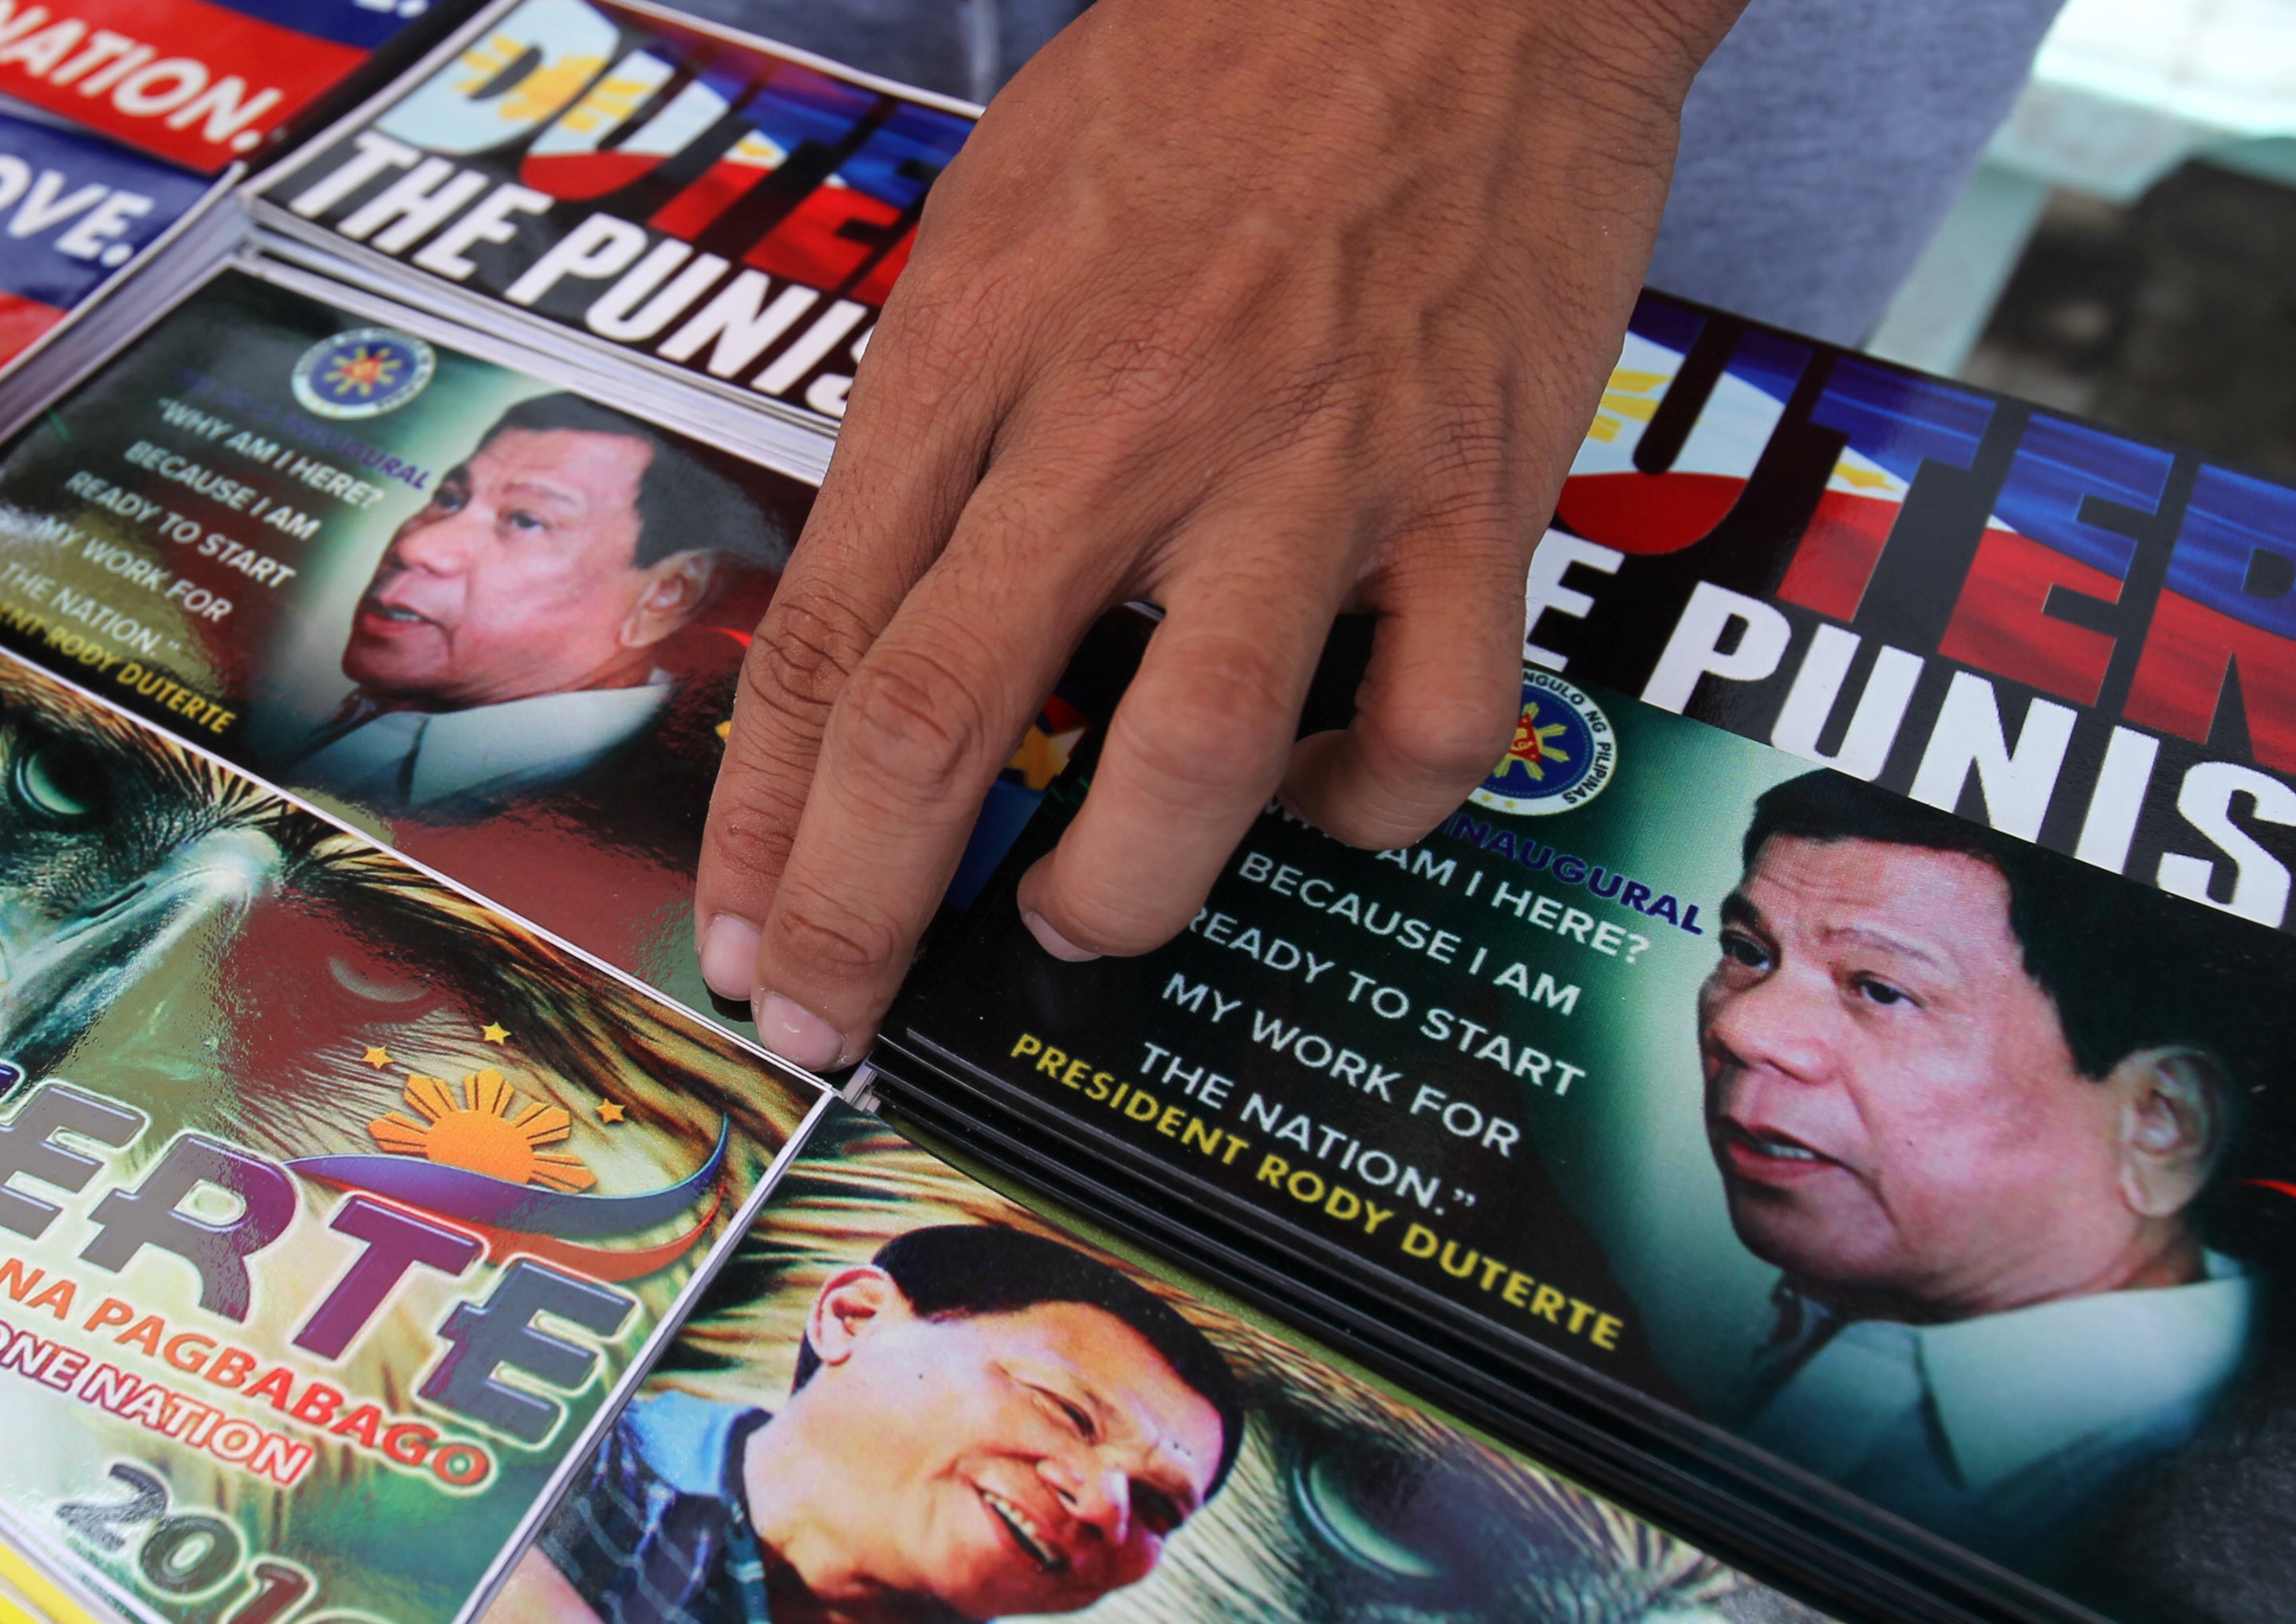 Duterte invites UN rights body to open Philippine office as drug killings rise